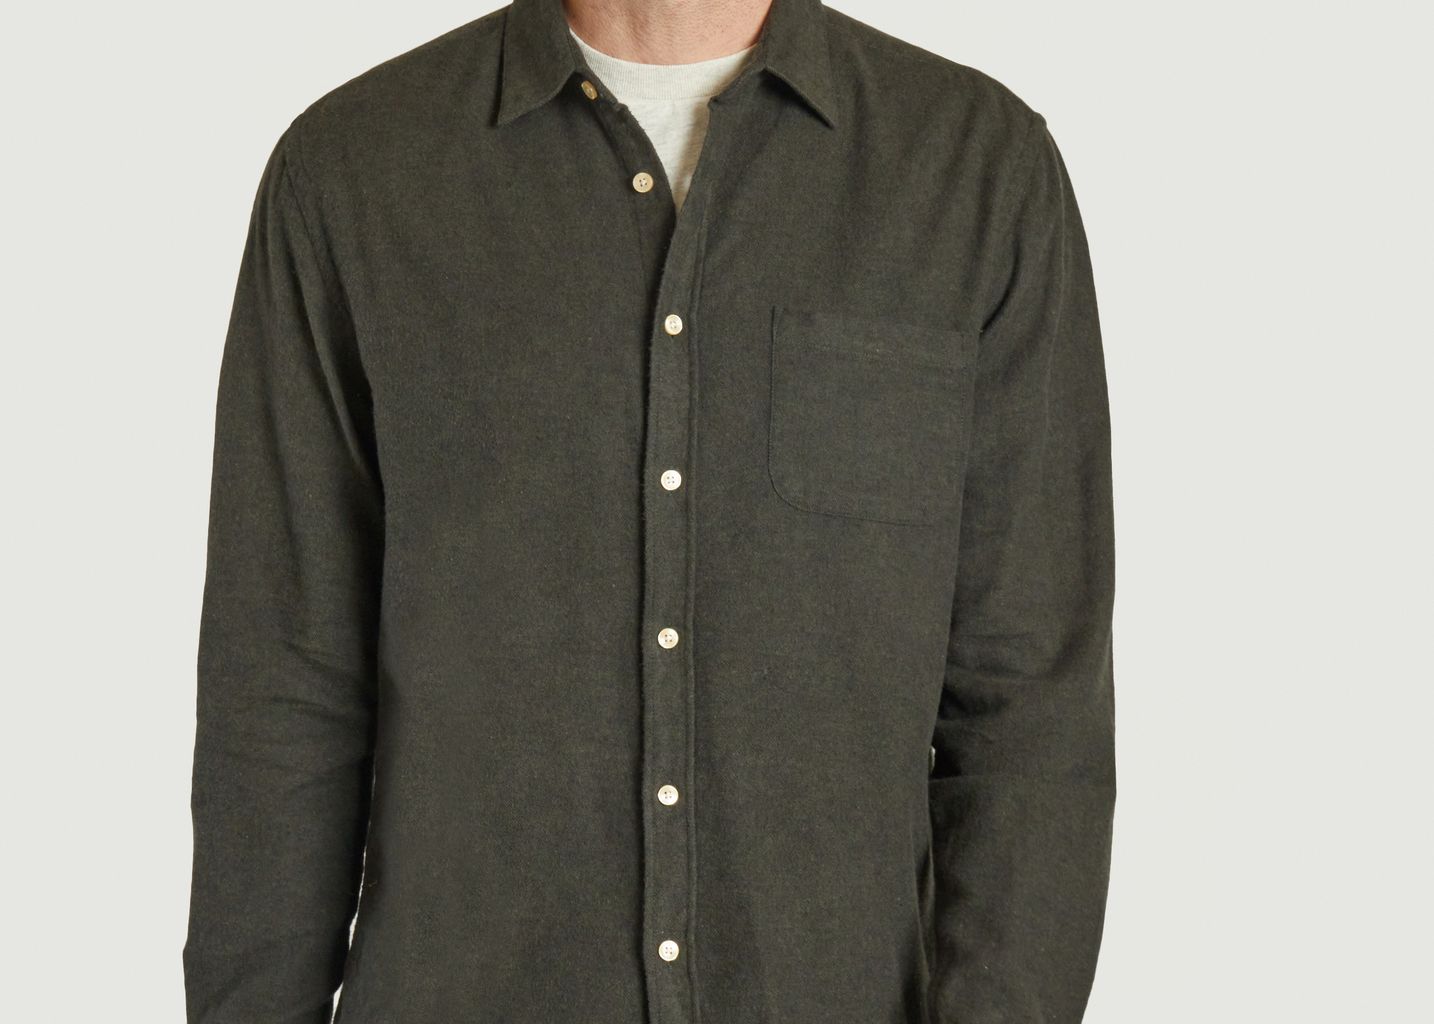 Teca shirt - Portuguese Flannel